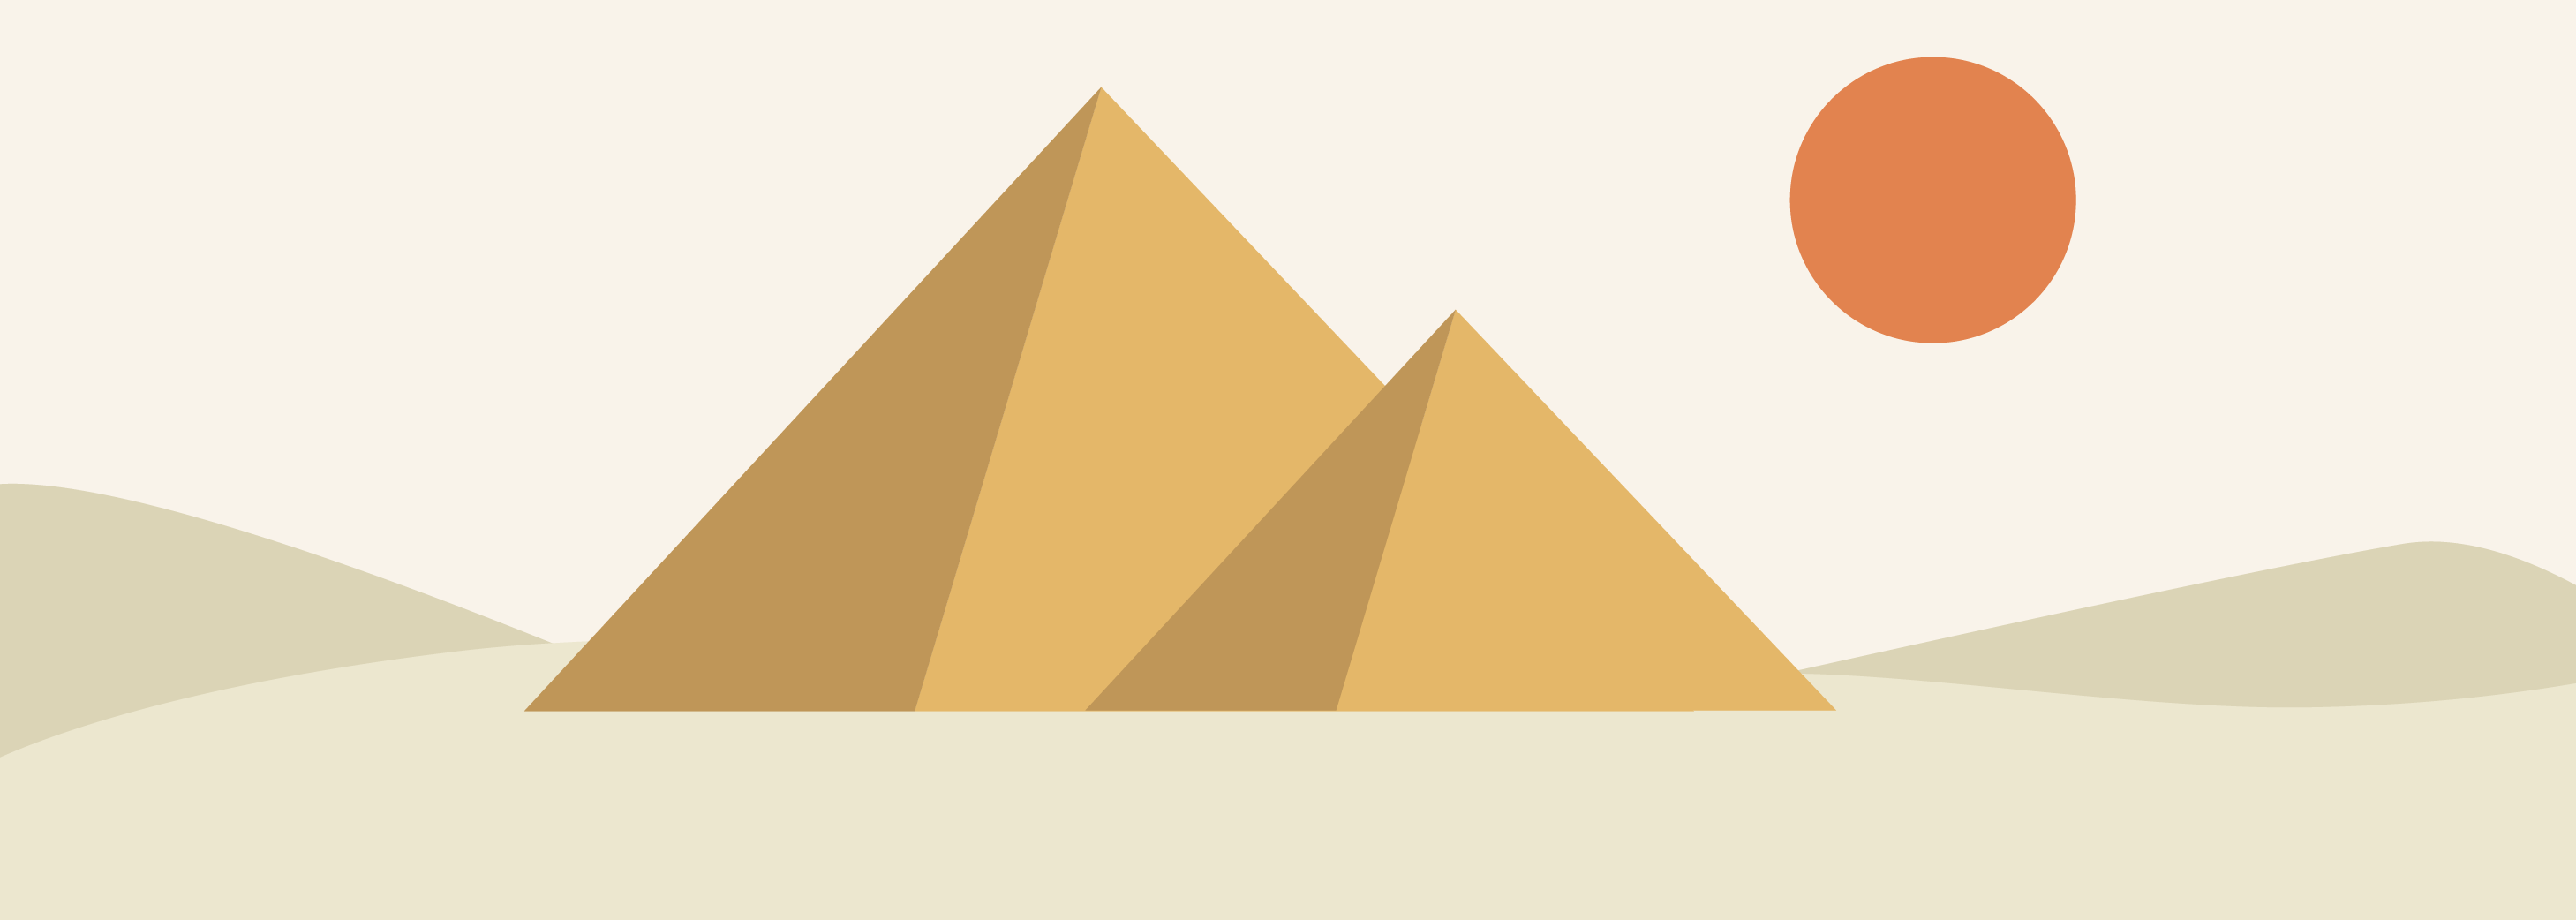 Graphic of pyramids